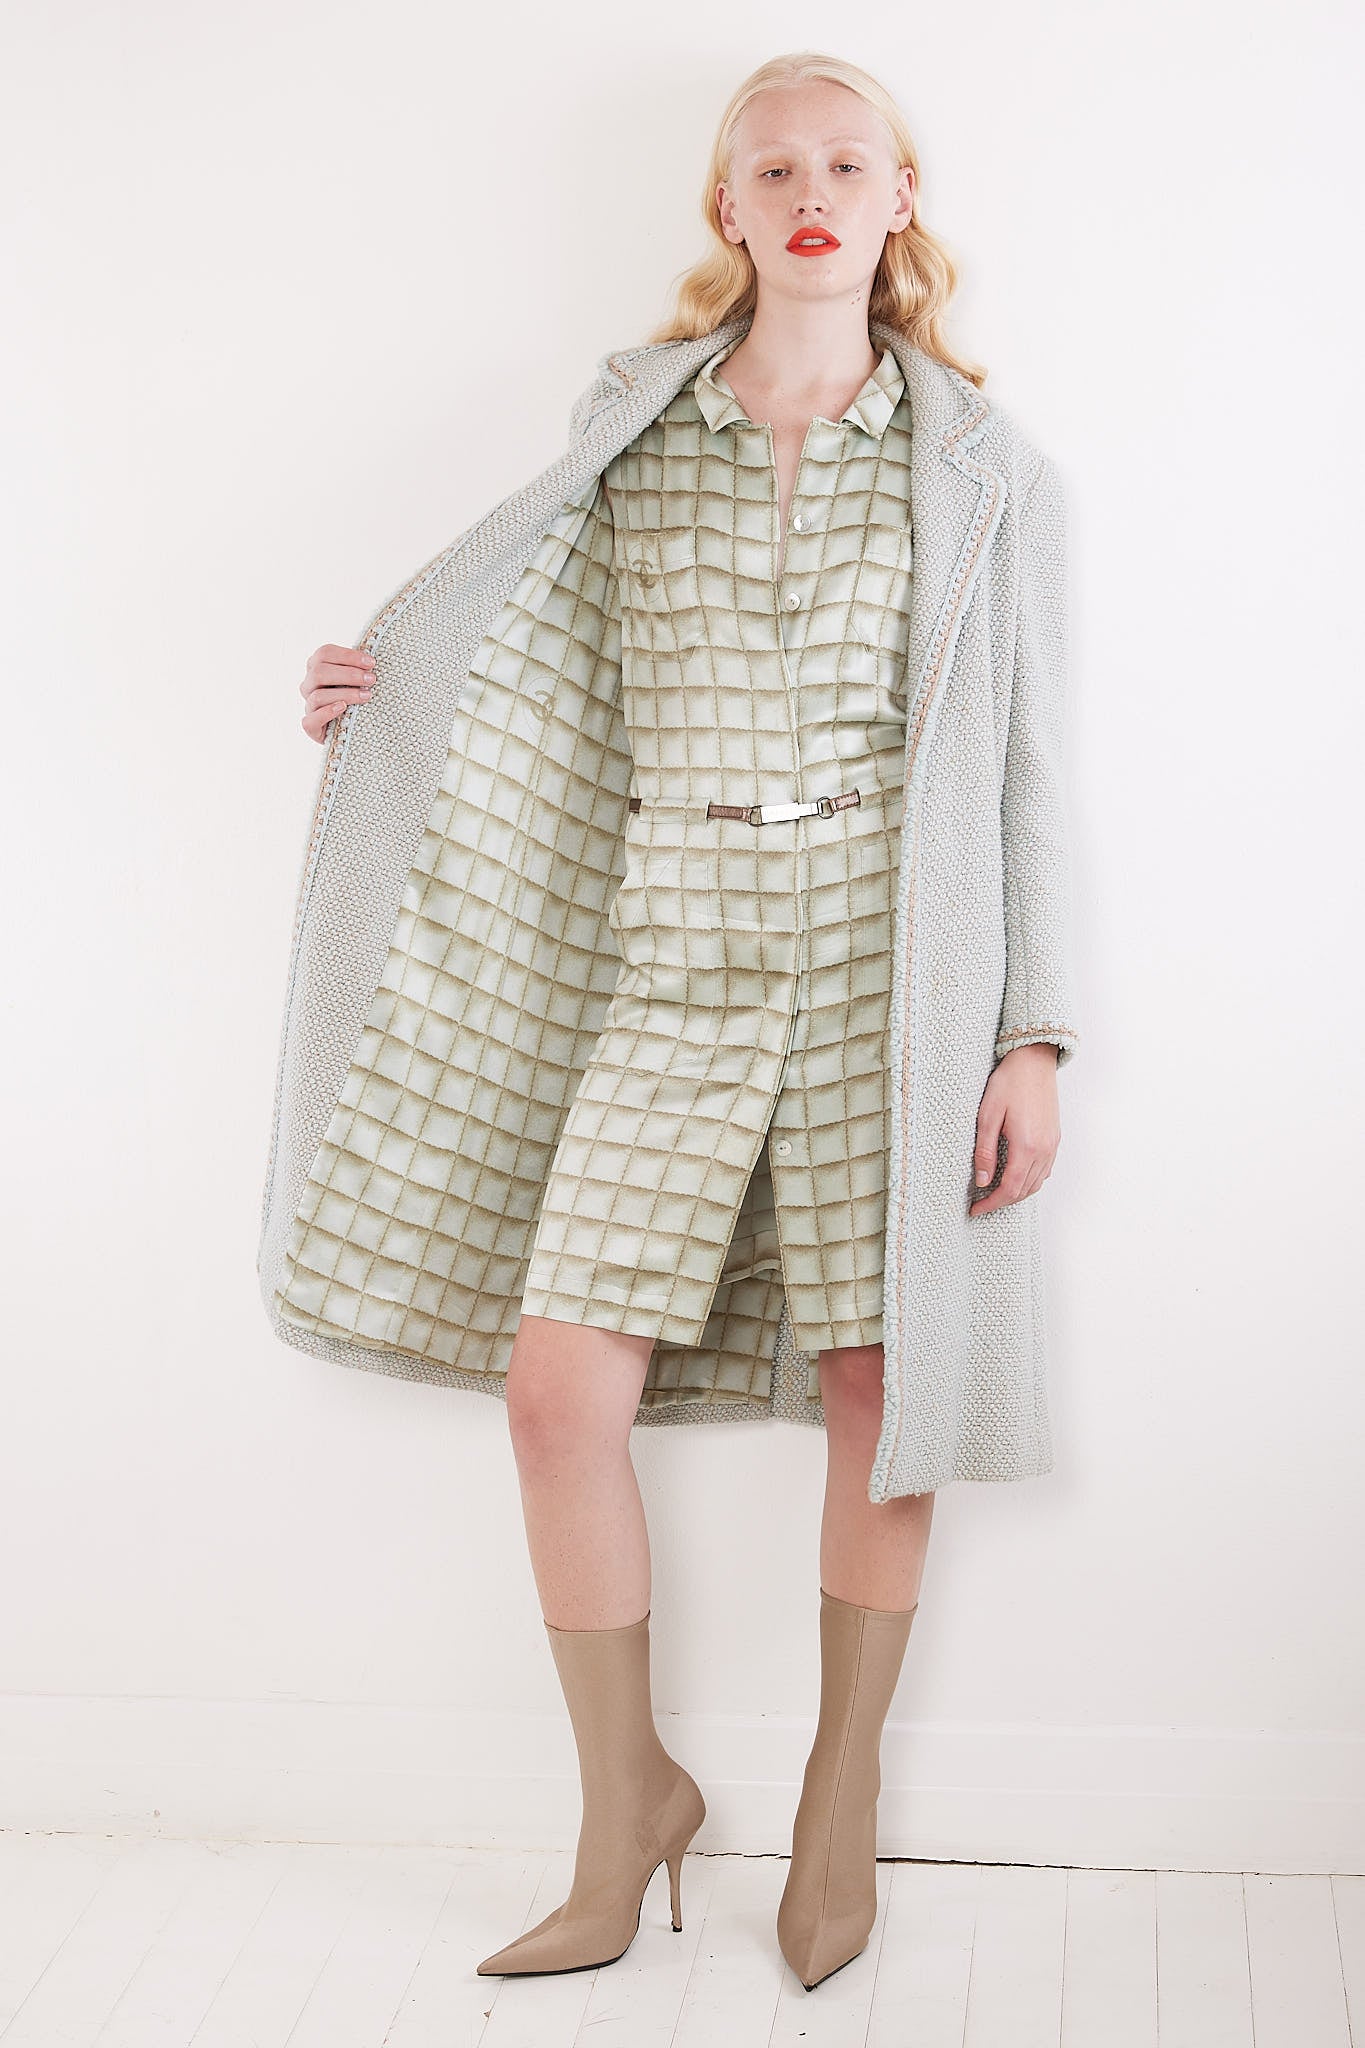 Chanel <br> F/W 2000 runway tweed coat, silk dress & belt ensemble